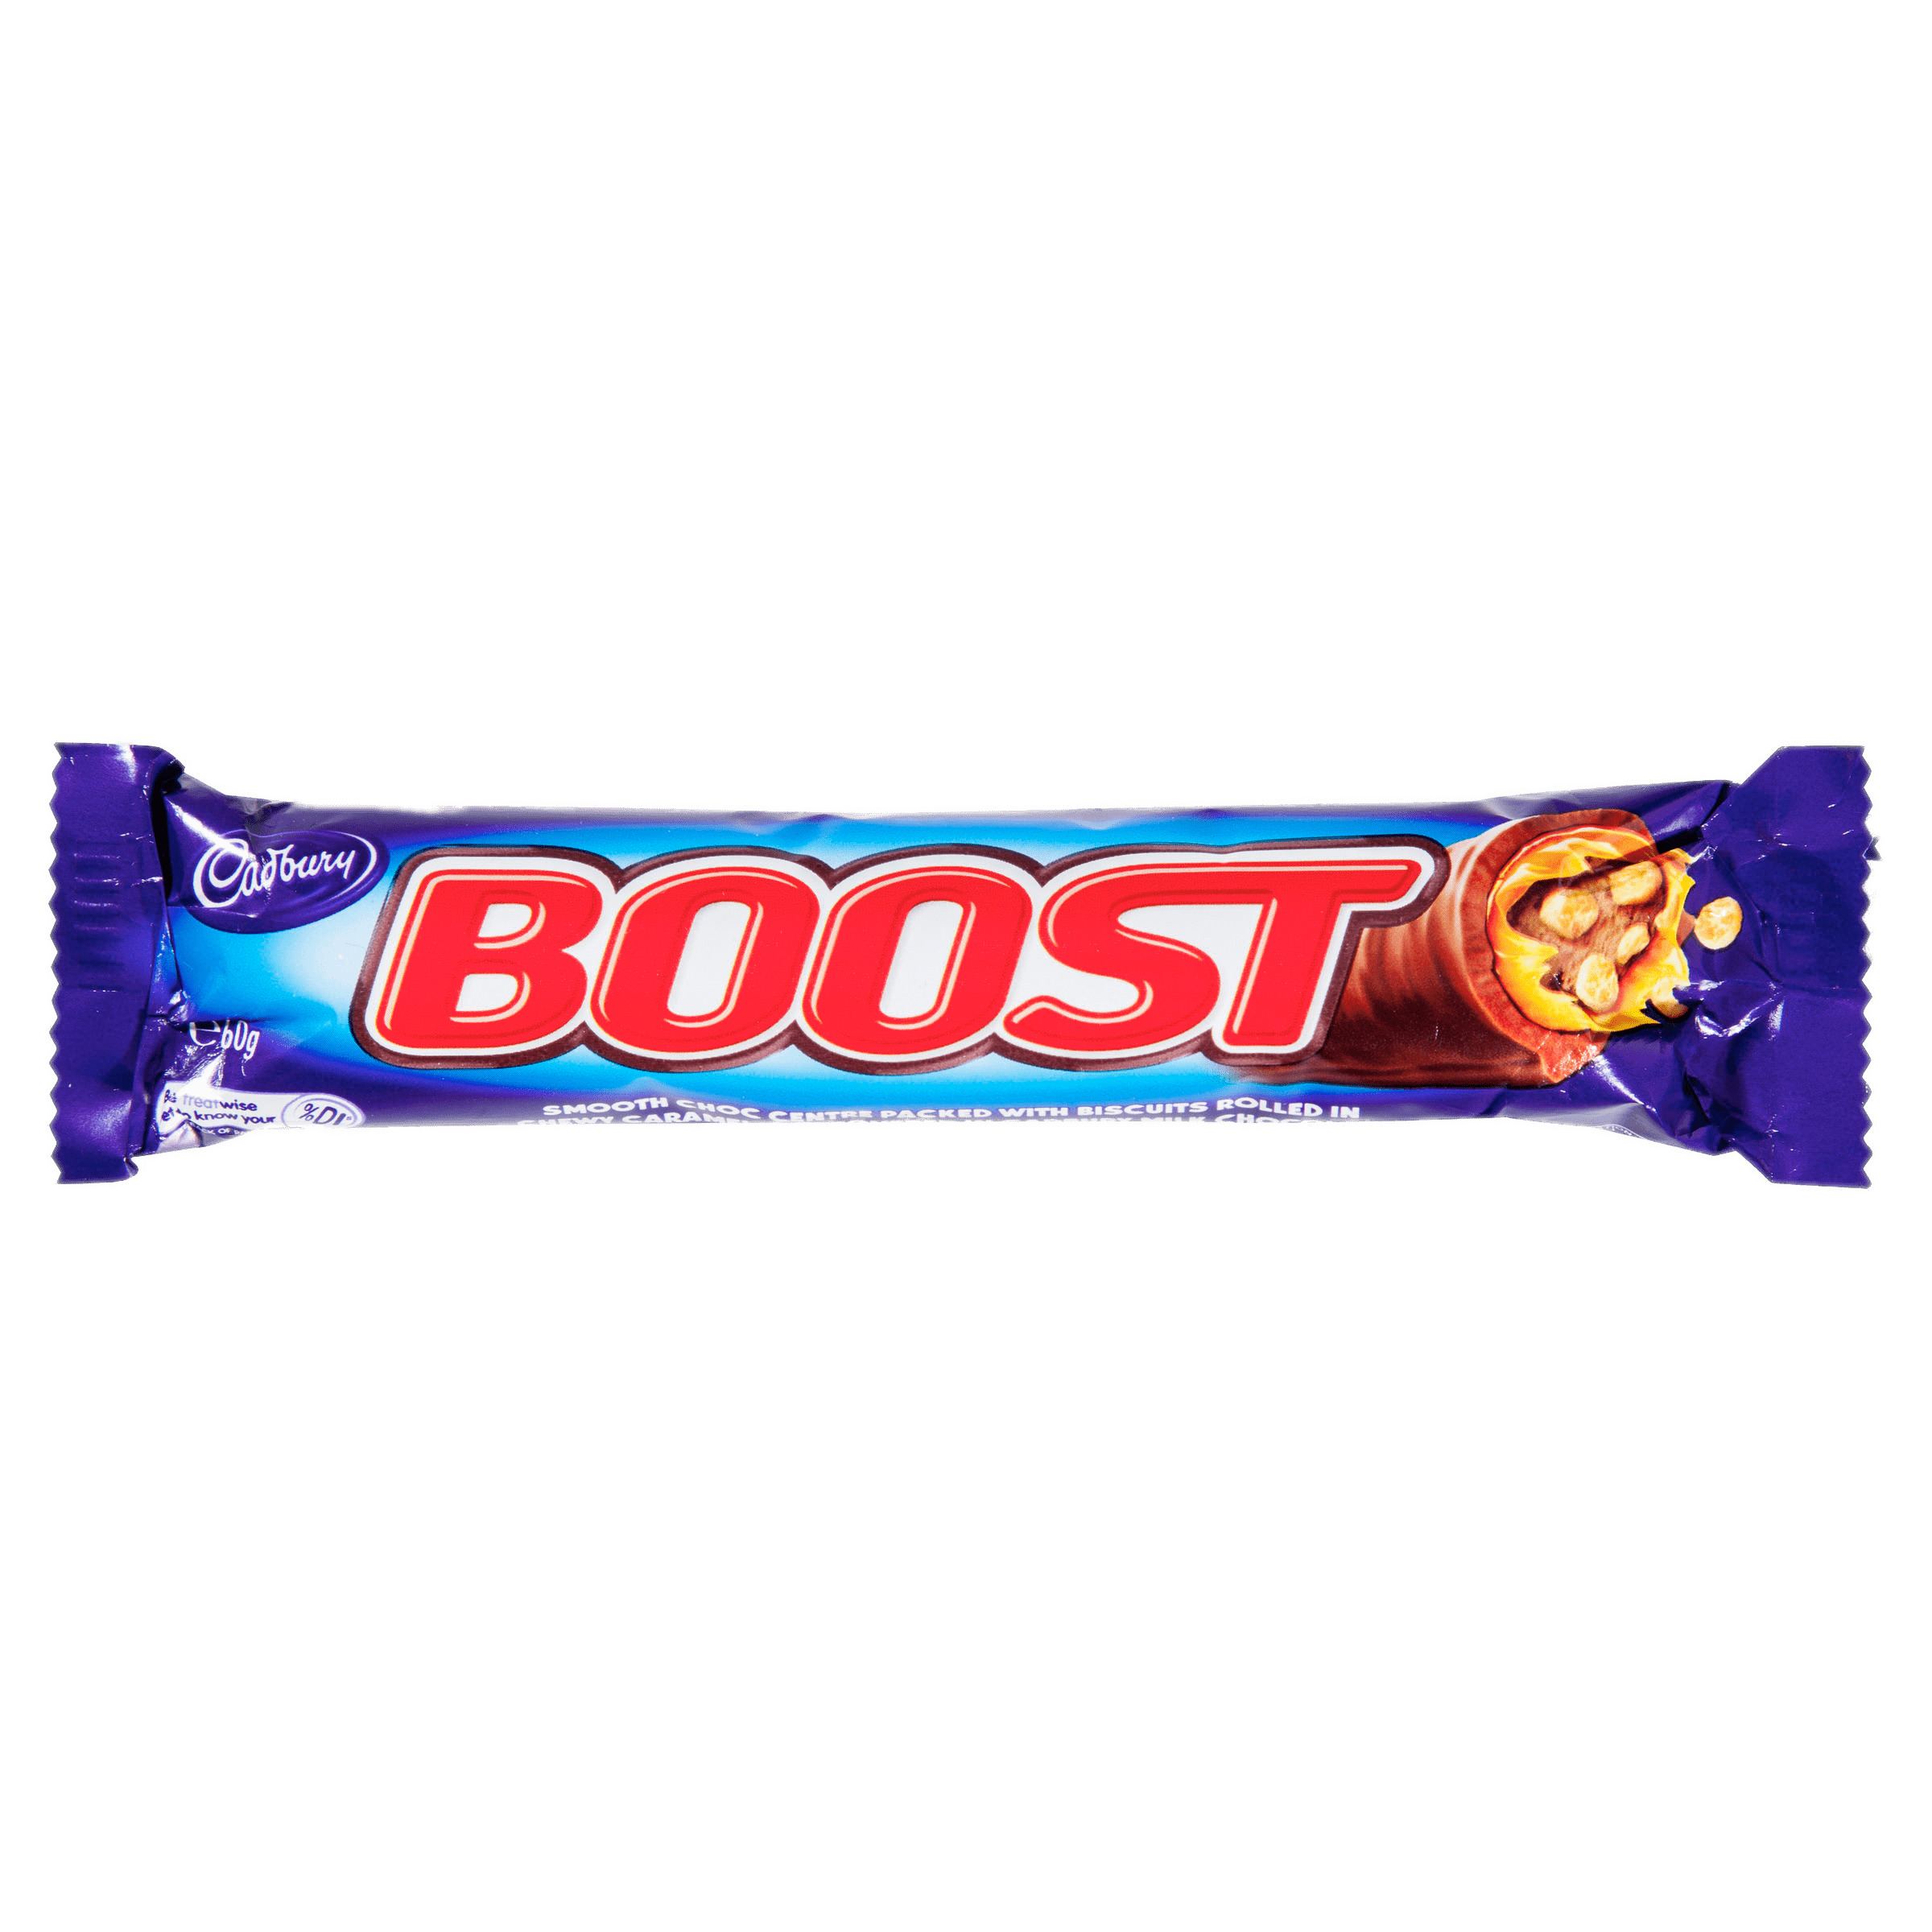 Boost Chocolate Bar icons